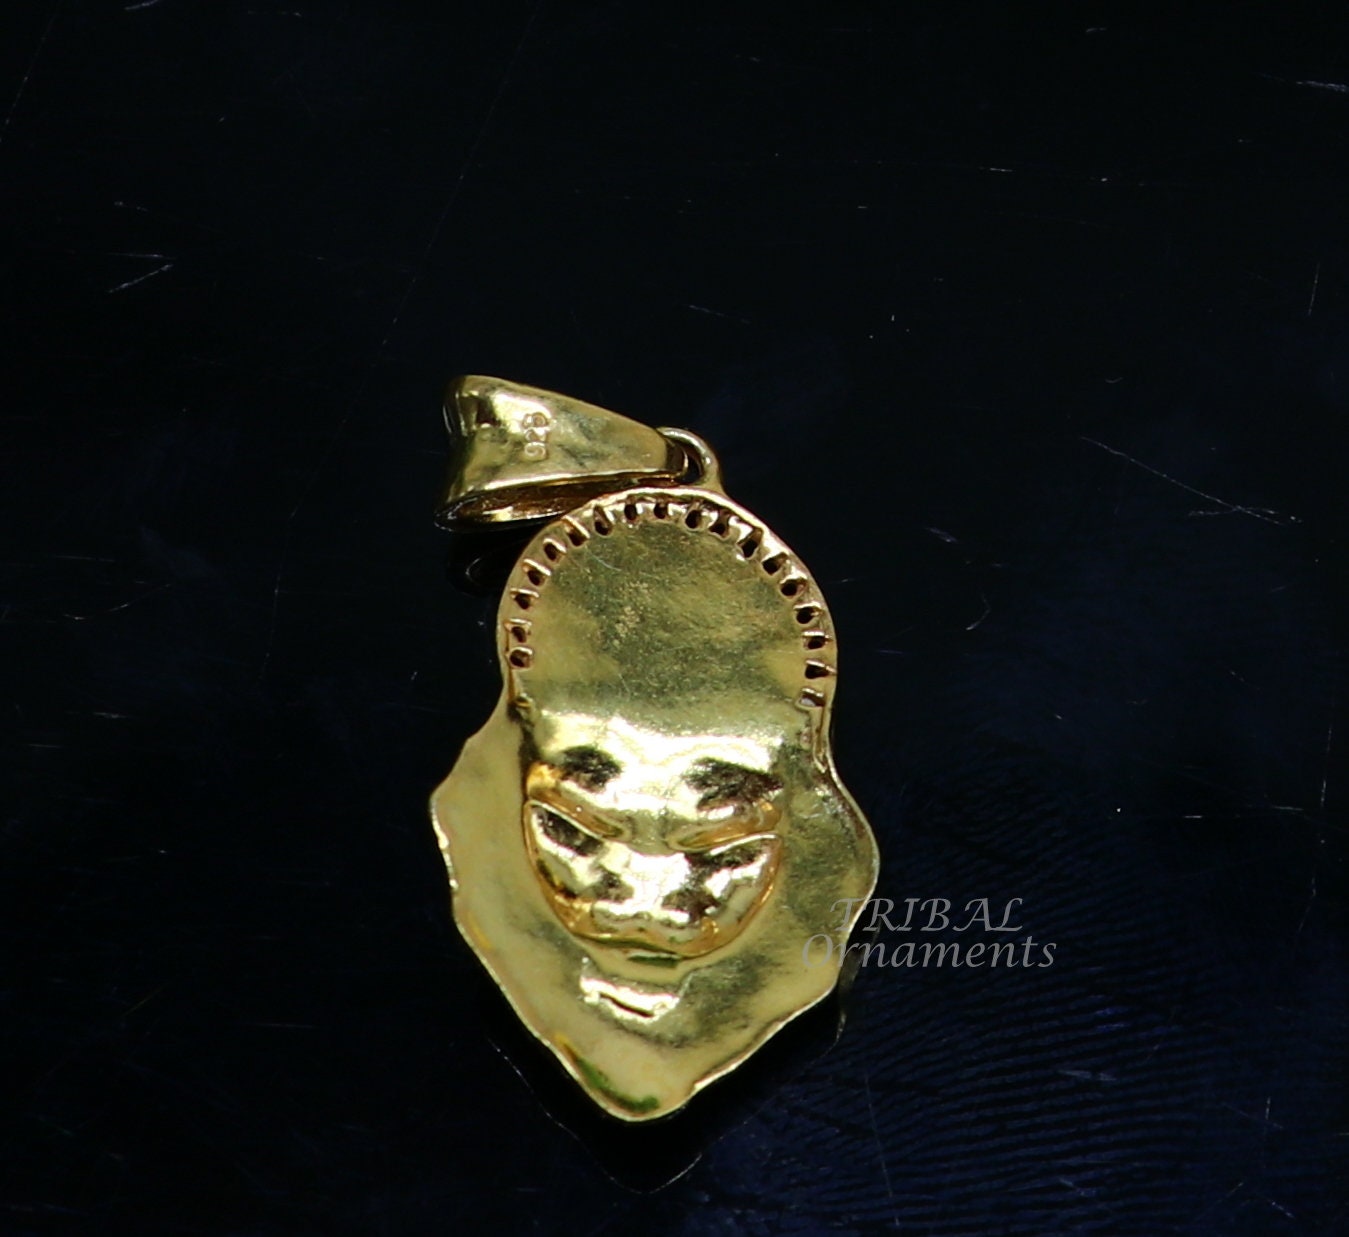 Gold polished 925 sterling silver God Vishnu Narsimha pendant, stylish customized pendant, best gifting locket pendant necklace nsp545 - TRIBAL ORNAMENTS